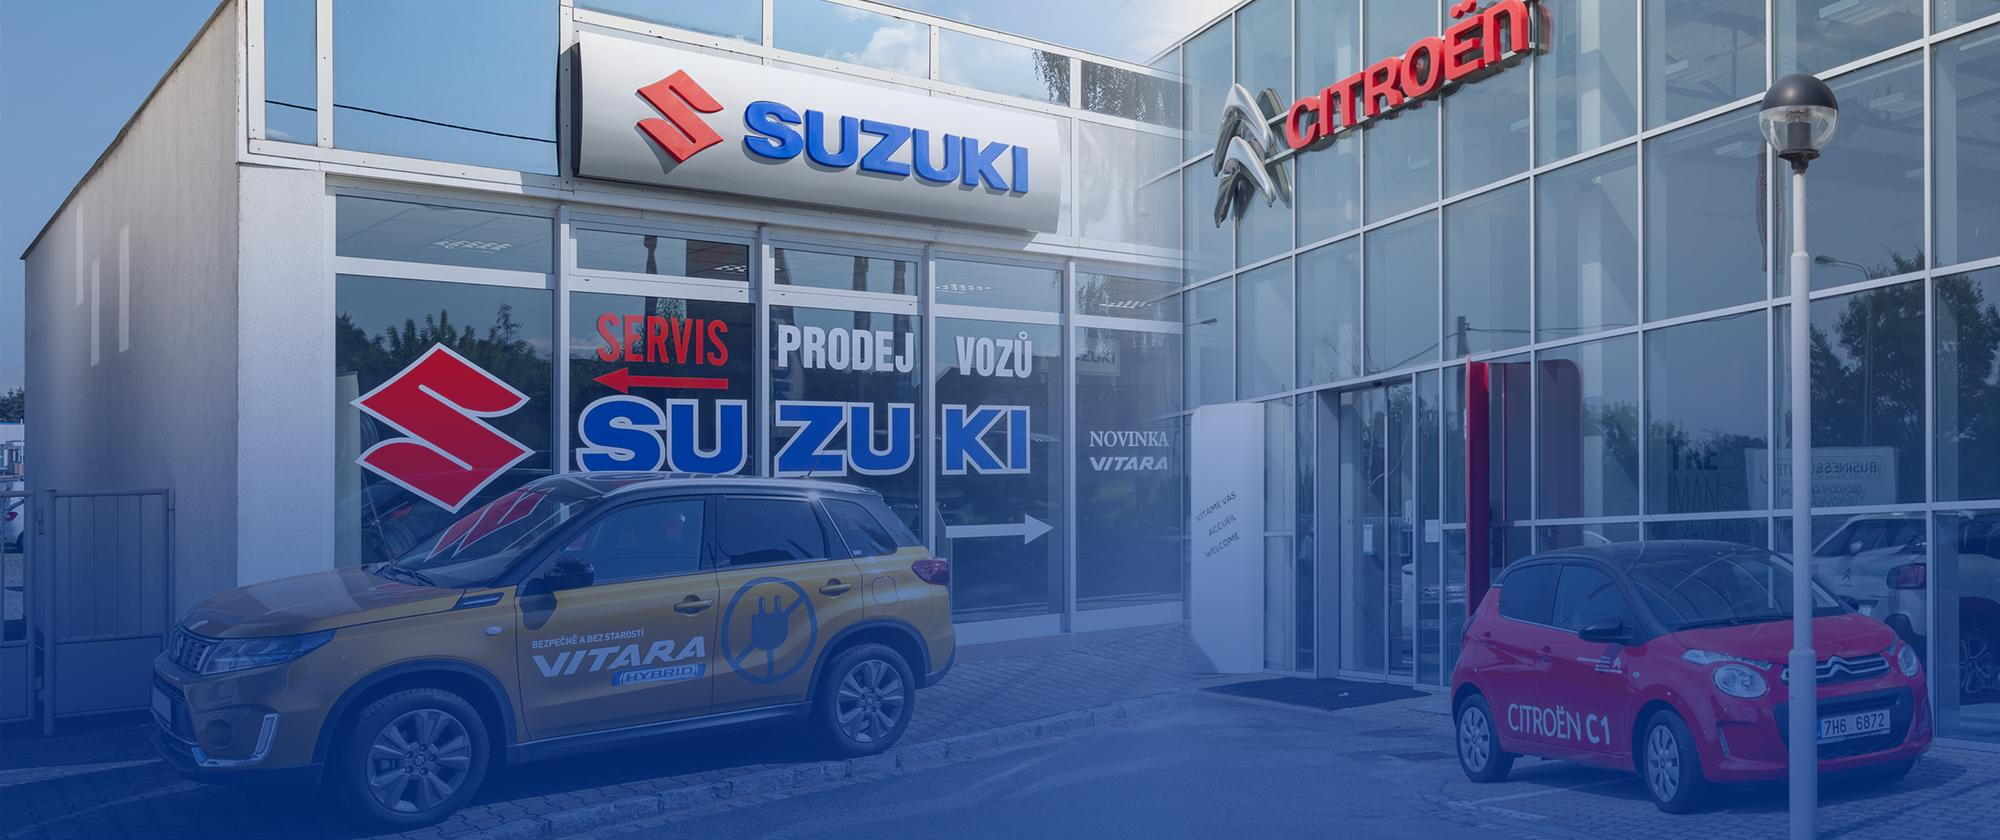 Autorizovaný prodej a servis vozů značek Citroën & Suzuki